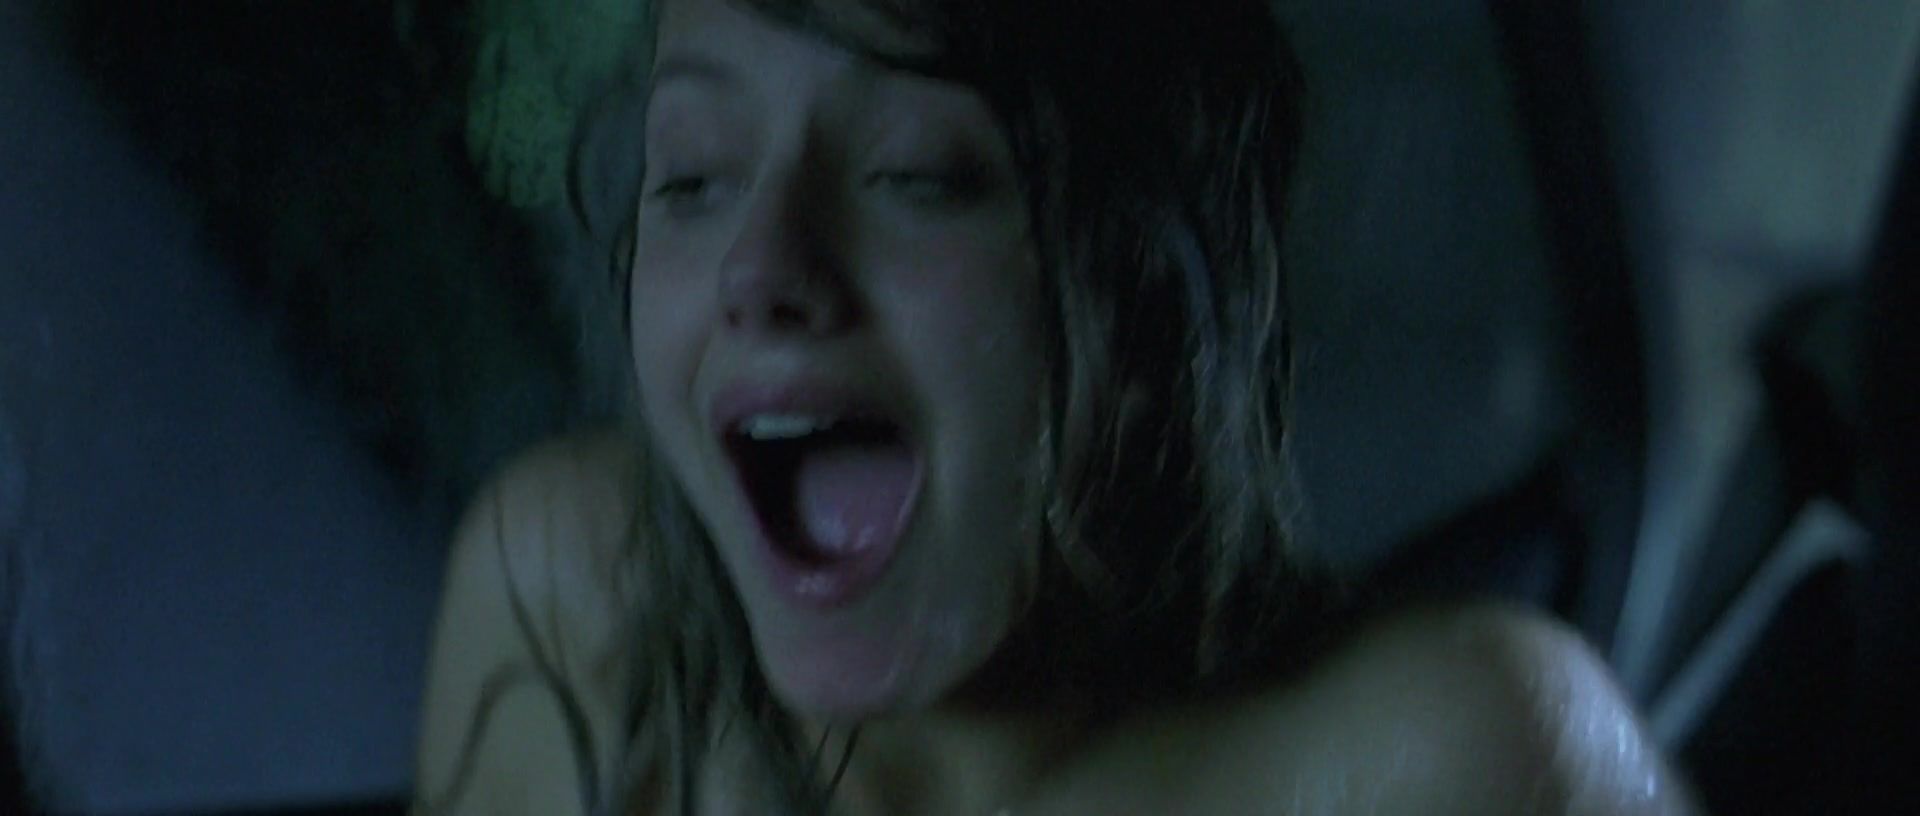 Glam Naked Melanie Laurent from French movie "Je vais bien, ne t'en fais pas" | Released in 2006 Cfnm